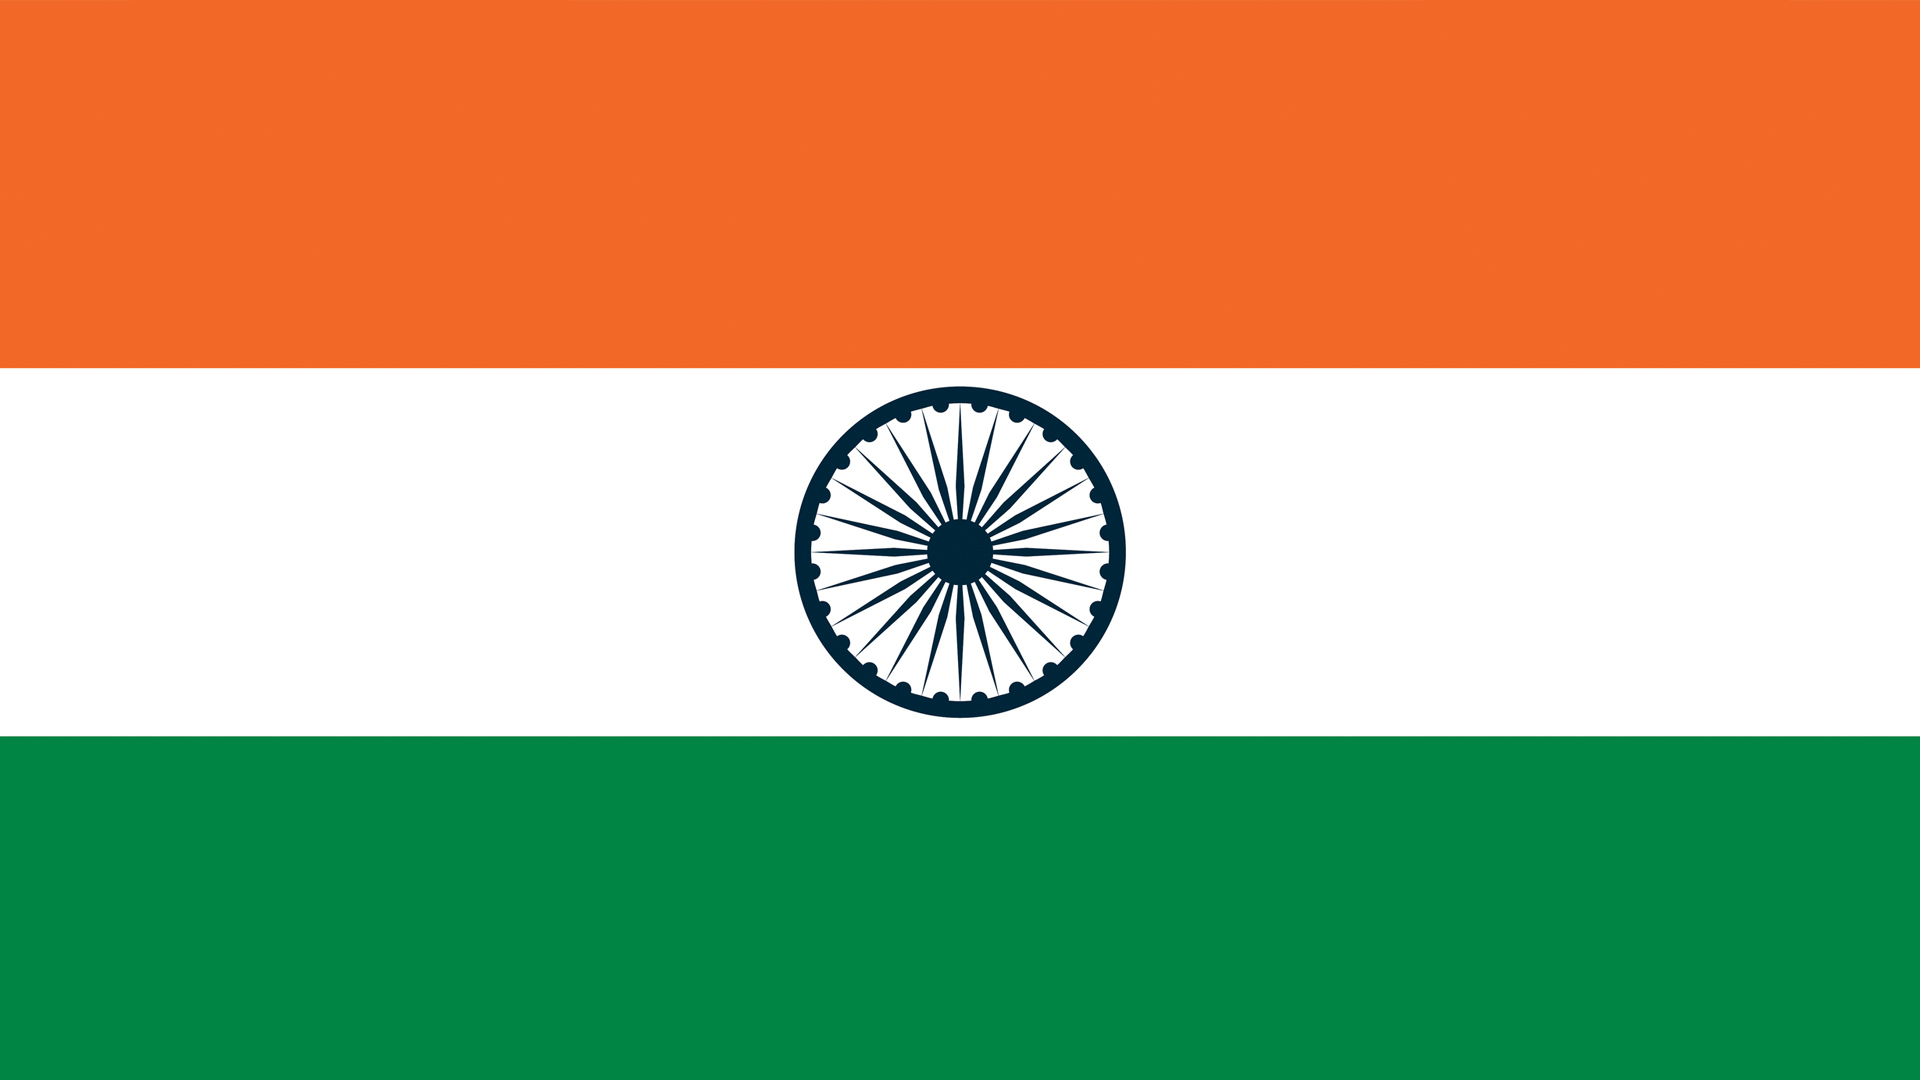 An orange white and green flag